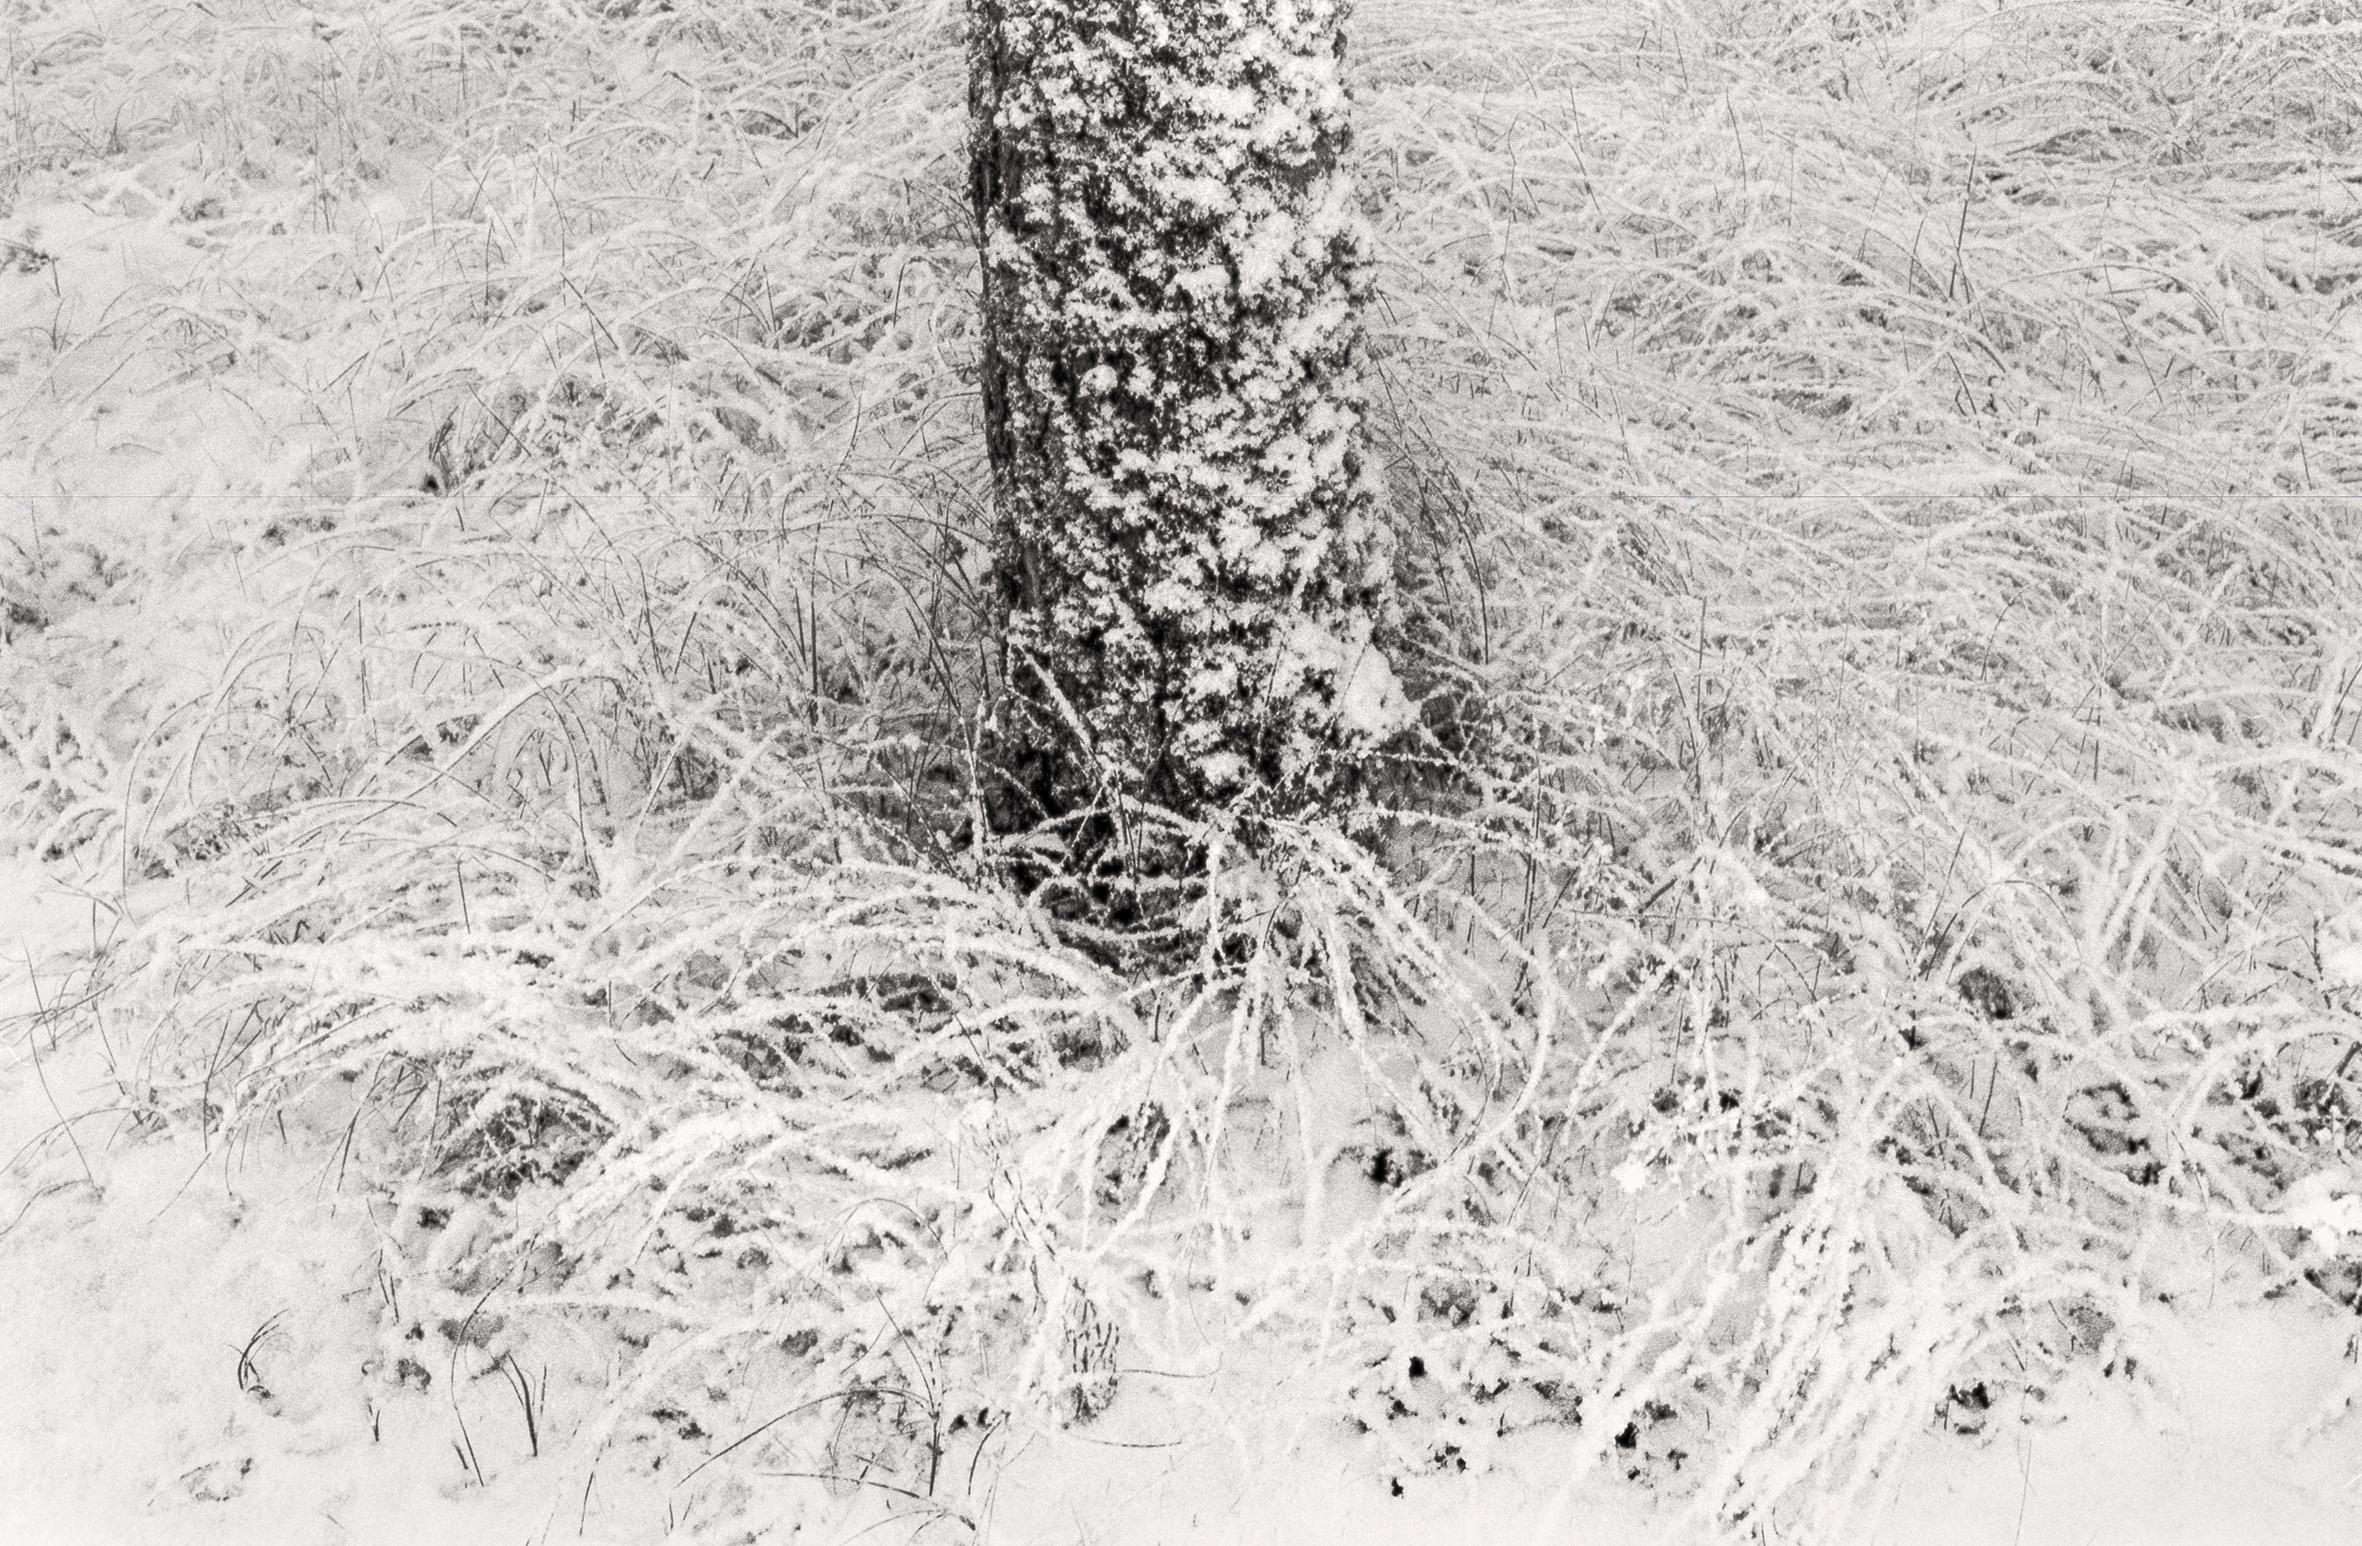 Ugne Pouwell Landscape Photograph - 'Baltic freeze #2' - black and white analogue landscape photography 70 x 45 cm